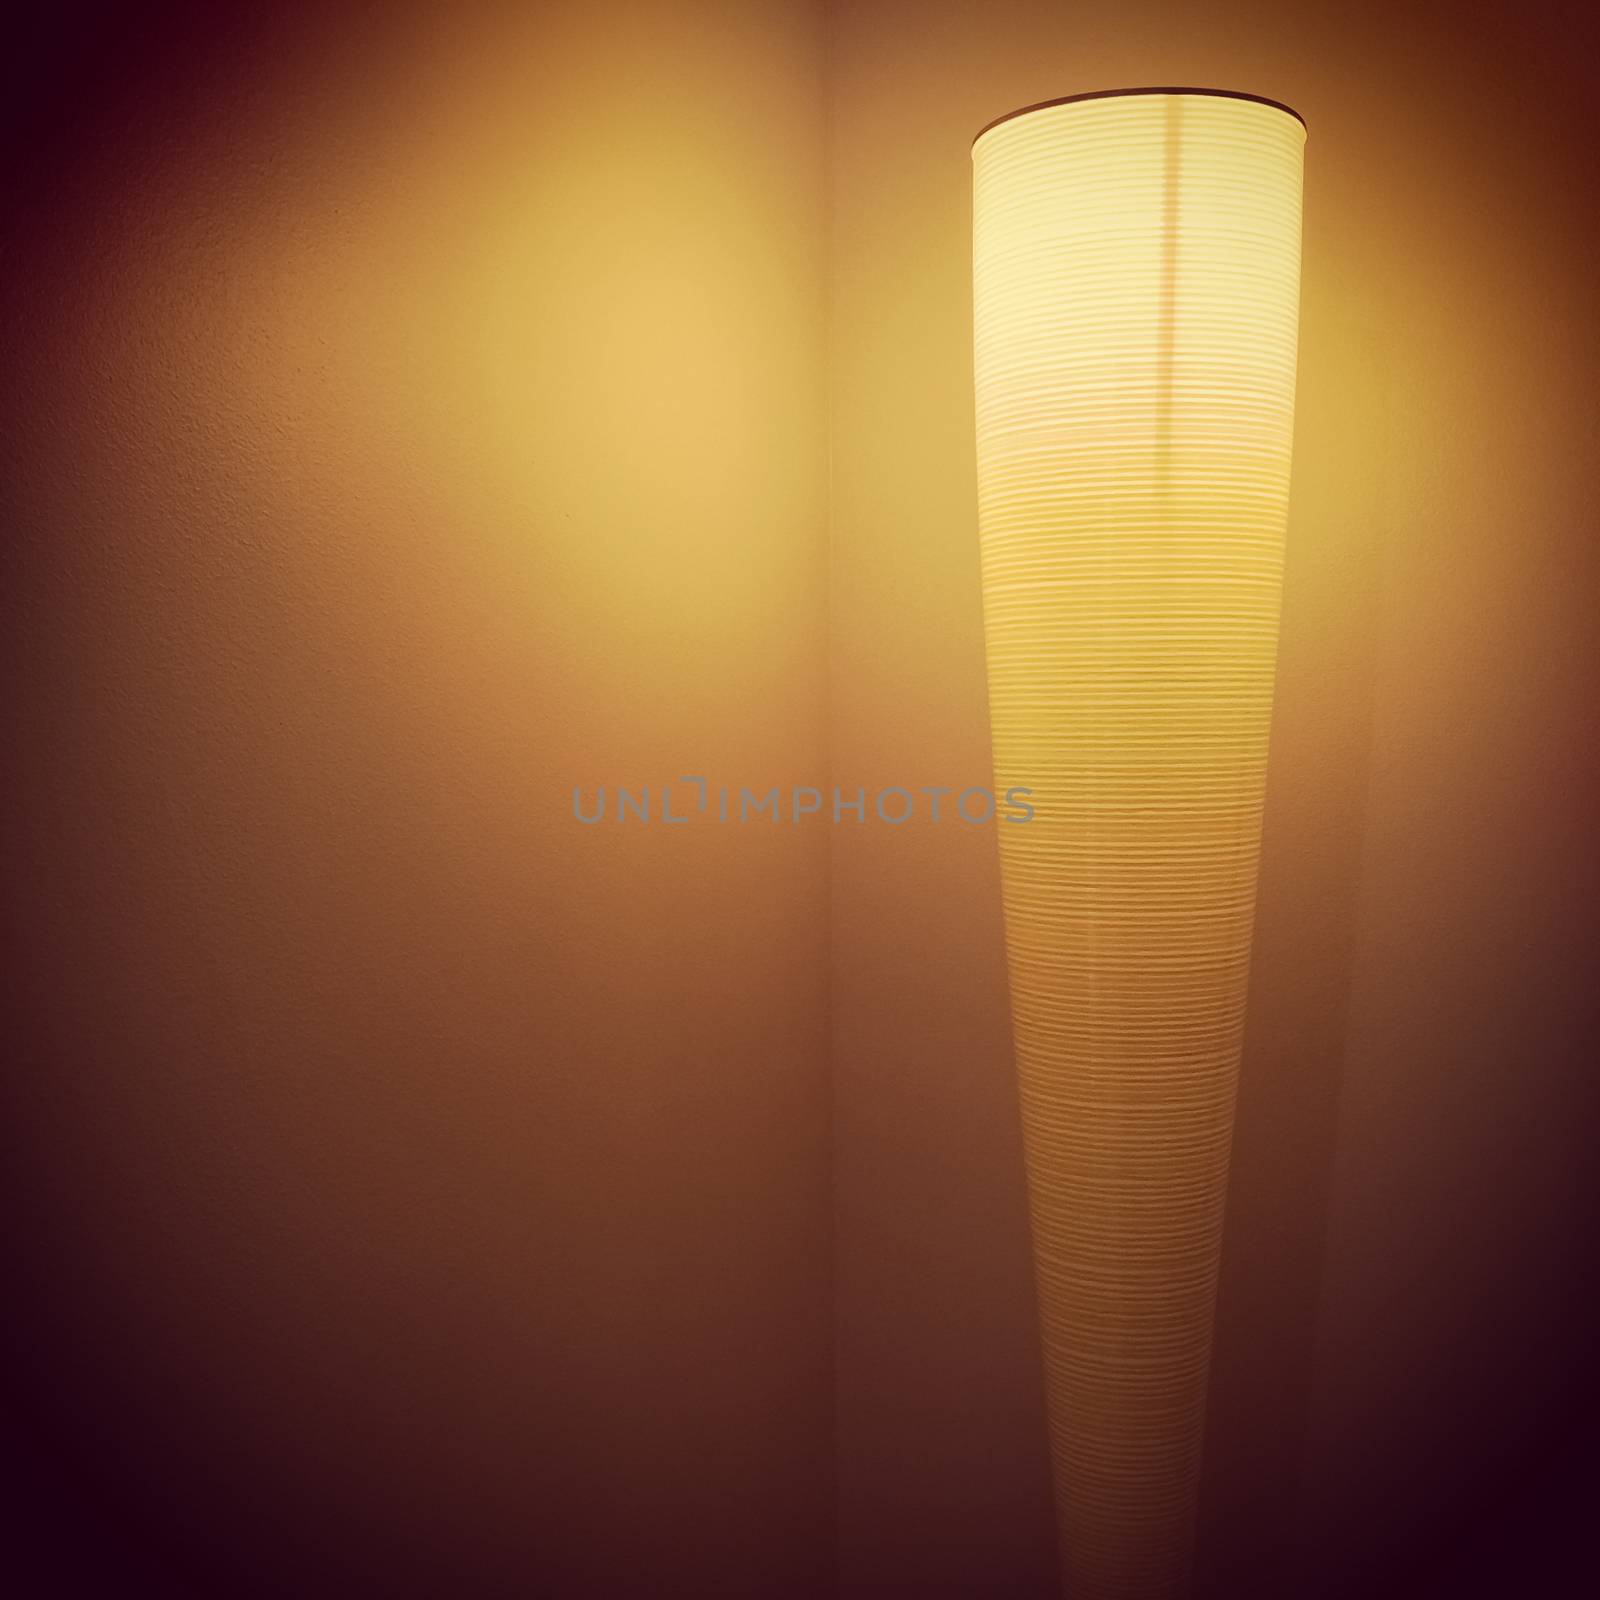 Modern lamp illuminating a dark room corner.